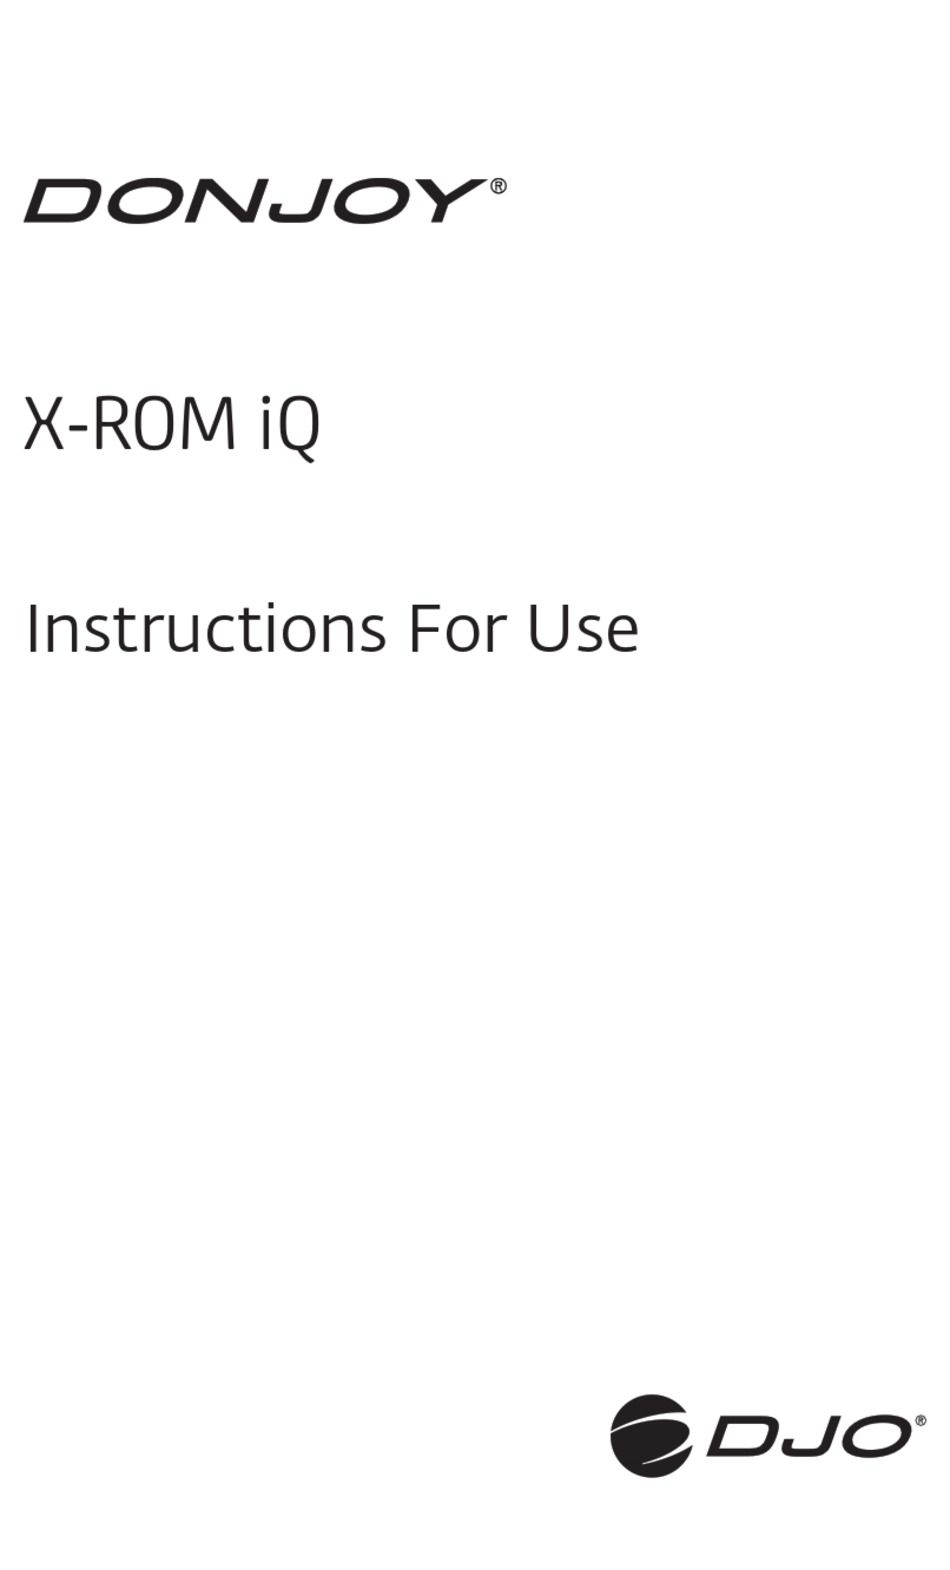 DJO DONJOY X-ROM IQ INSTRUCTIONS FOR USE MANUAL Pdf Download